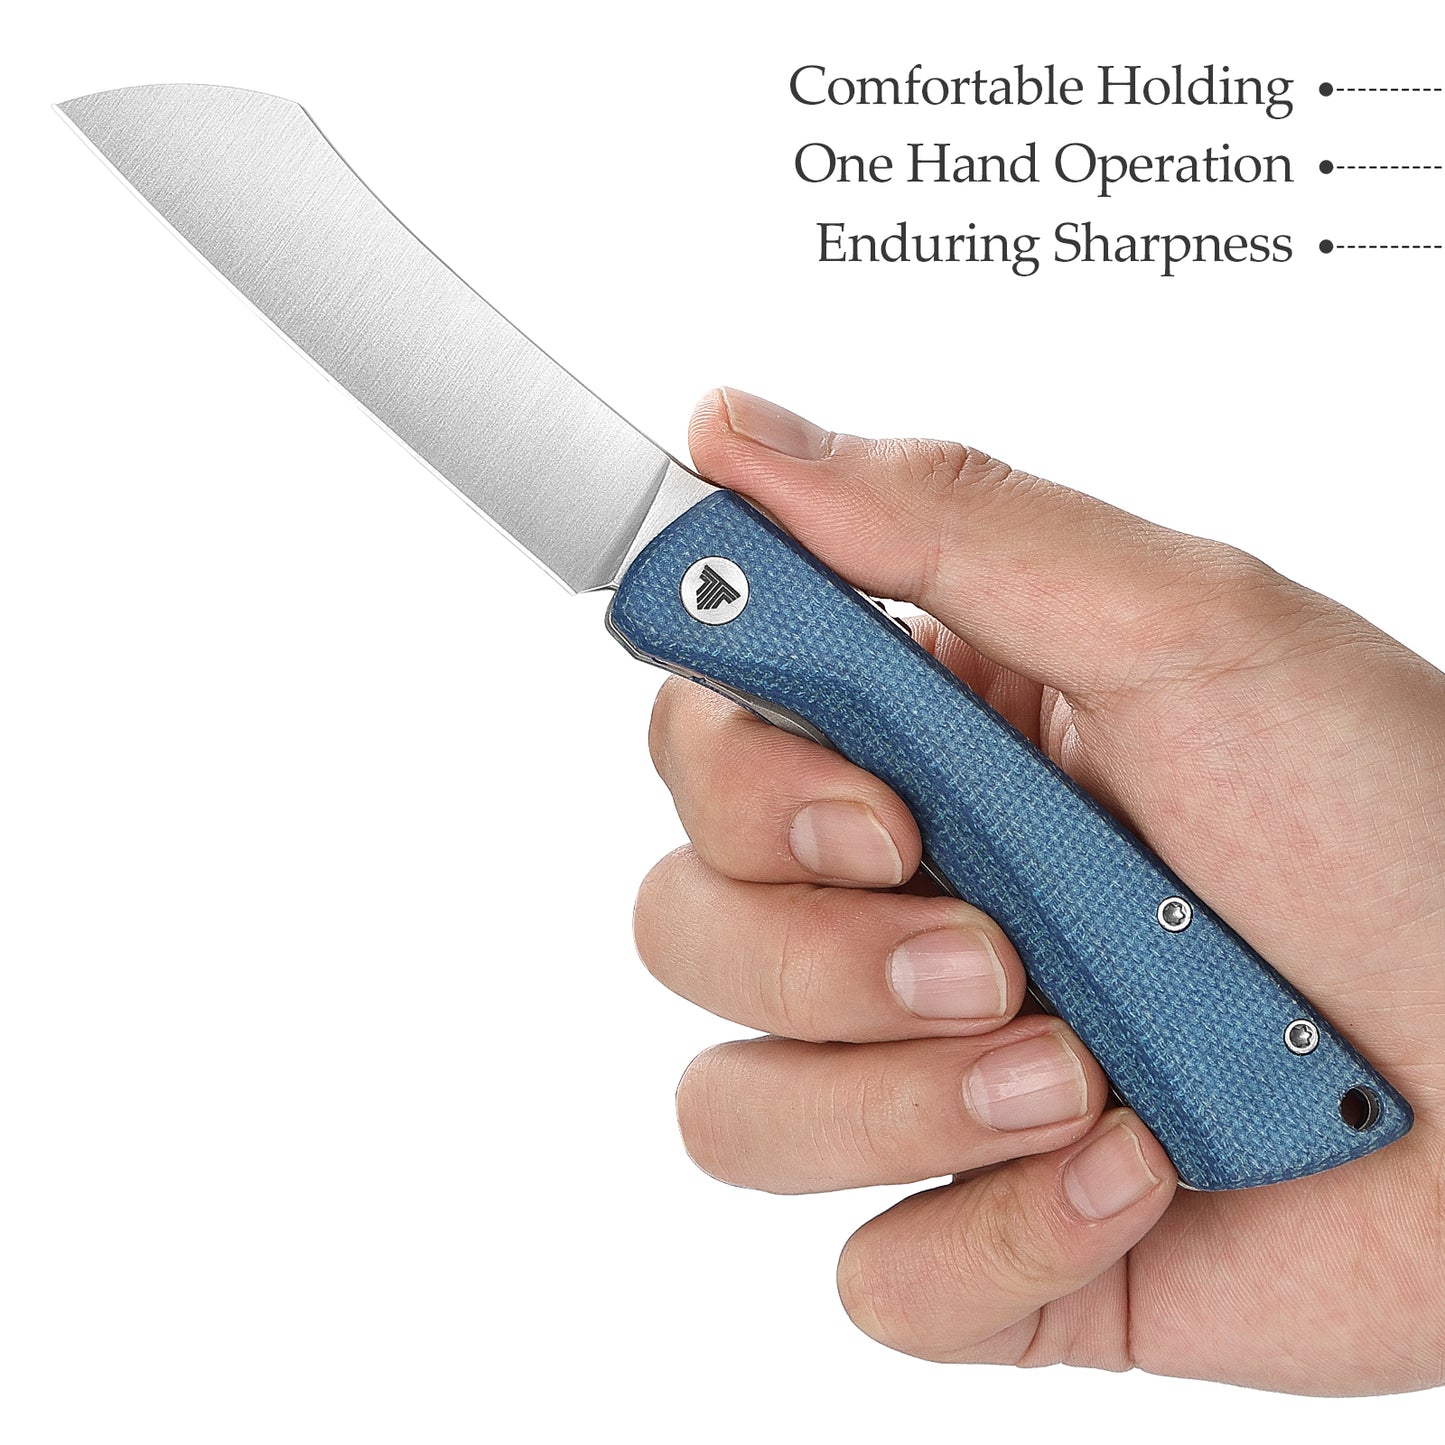 Norma-04L Higonokami Pocket Knife,3.3" 14C28N Steel,Micarta Handle